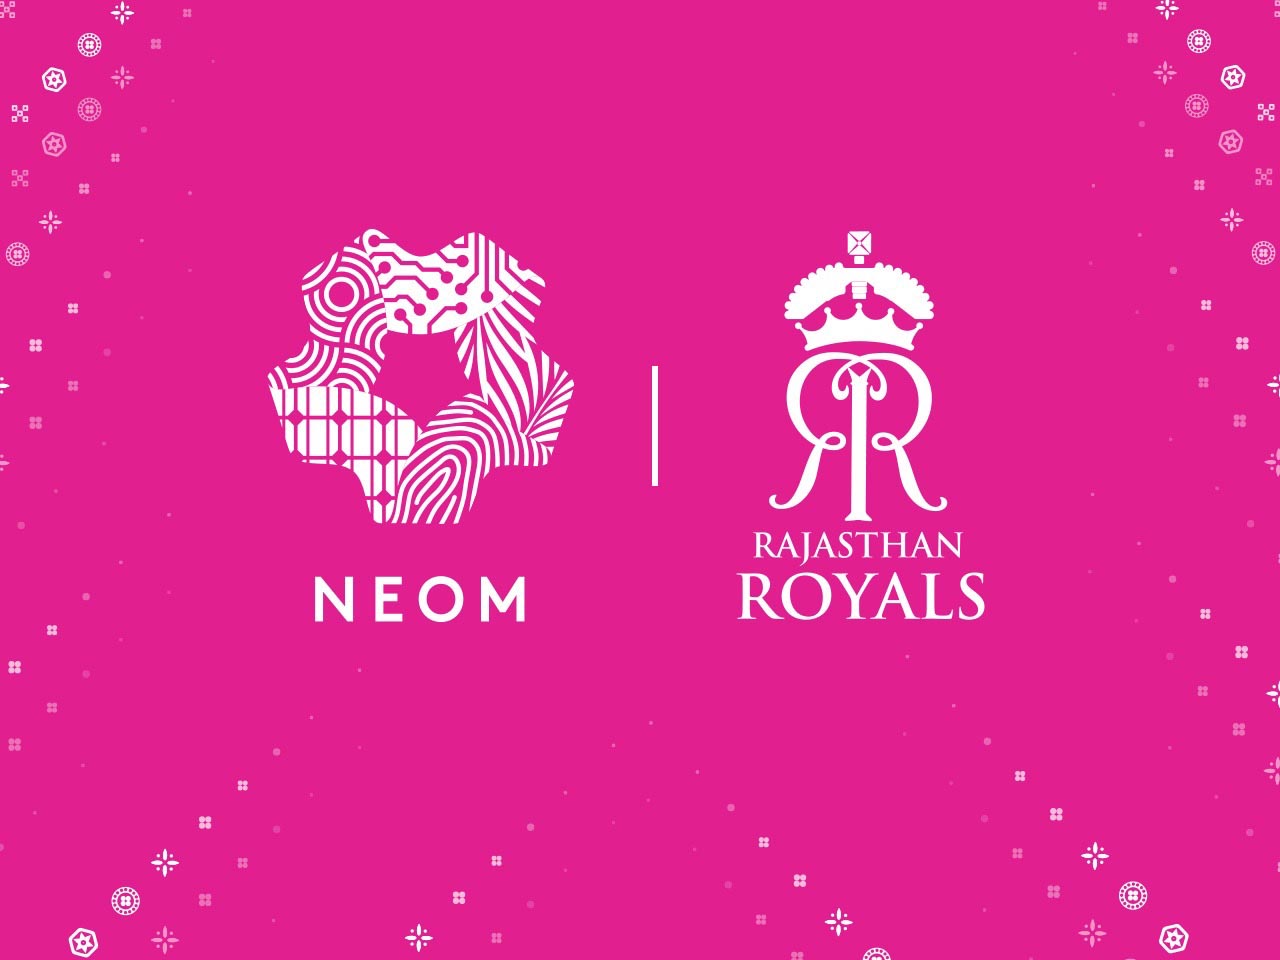 NEOM becomes principal partner of Rajasthan Royals, India's premier T20 cricket giants